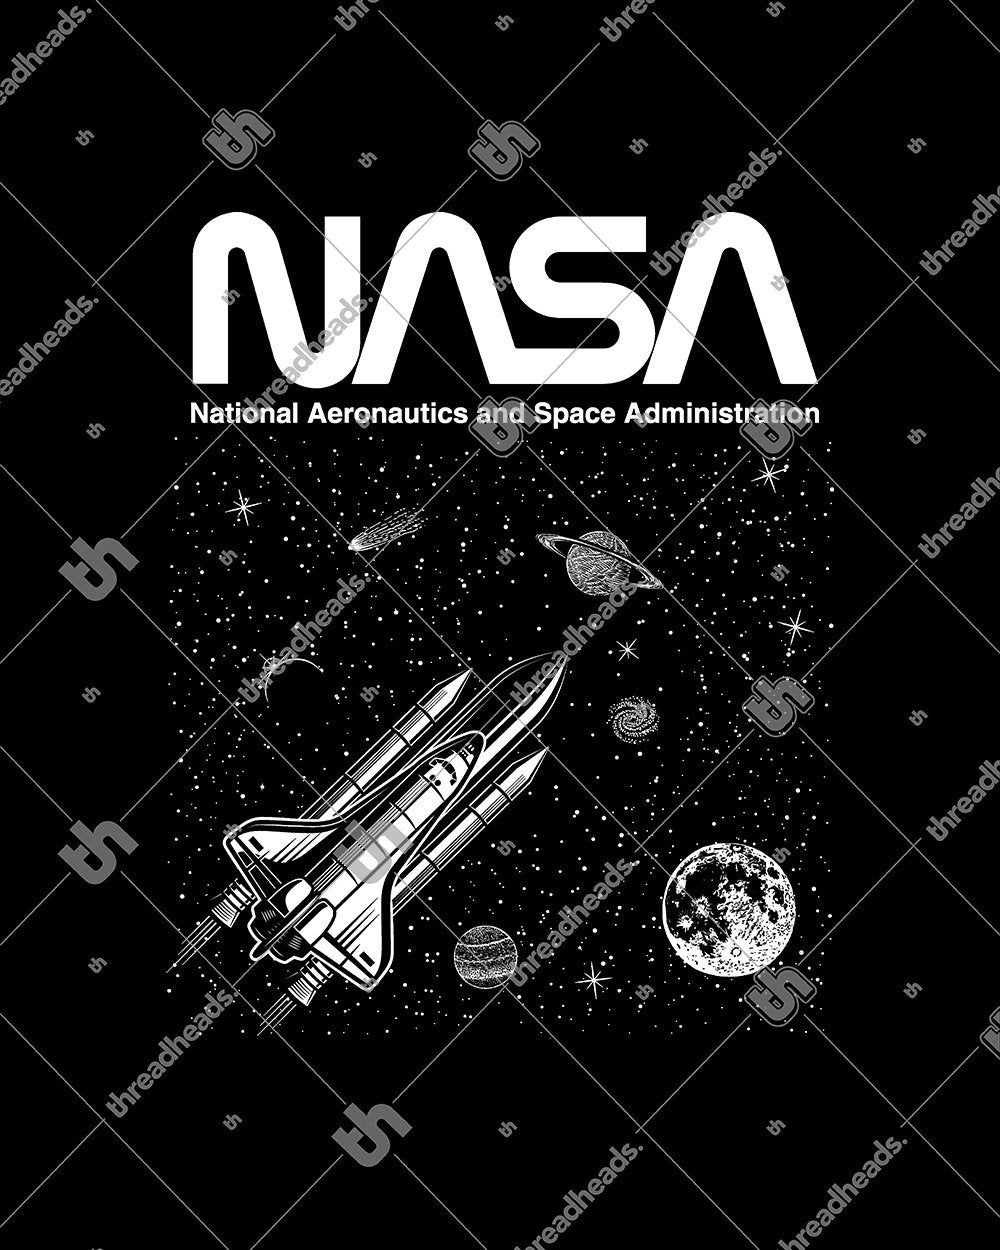 NASA Galaxy Long Sleeve Europe Online #colour_black